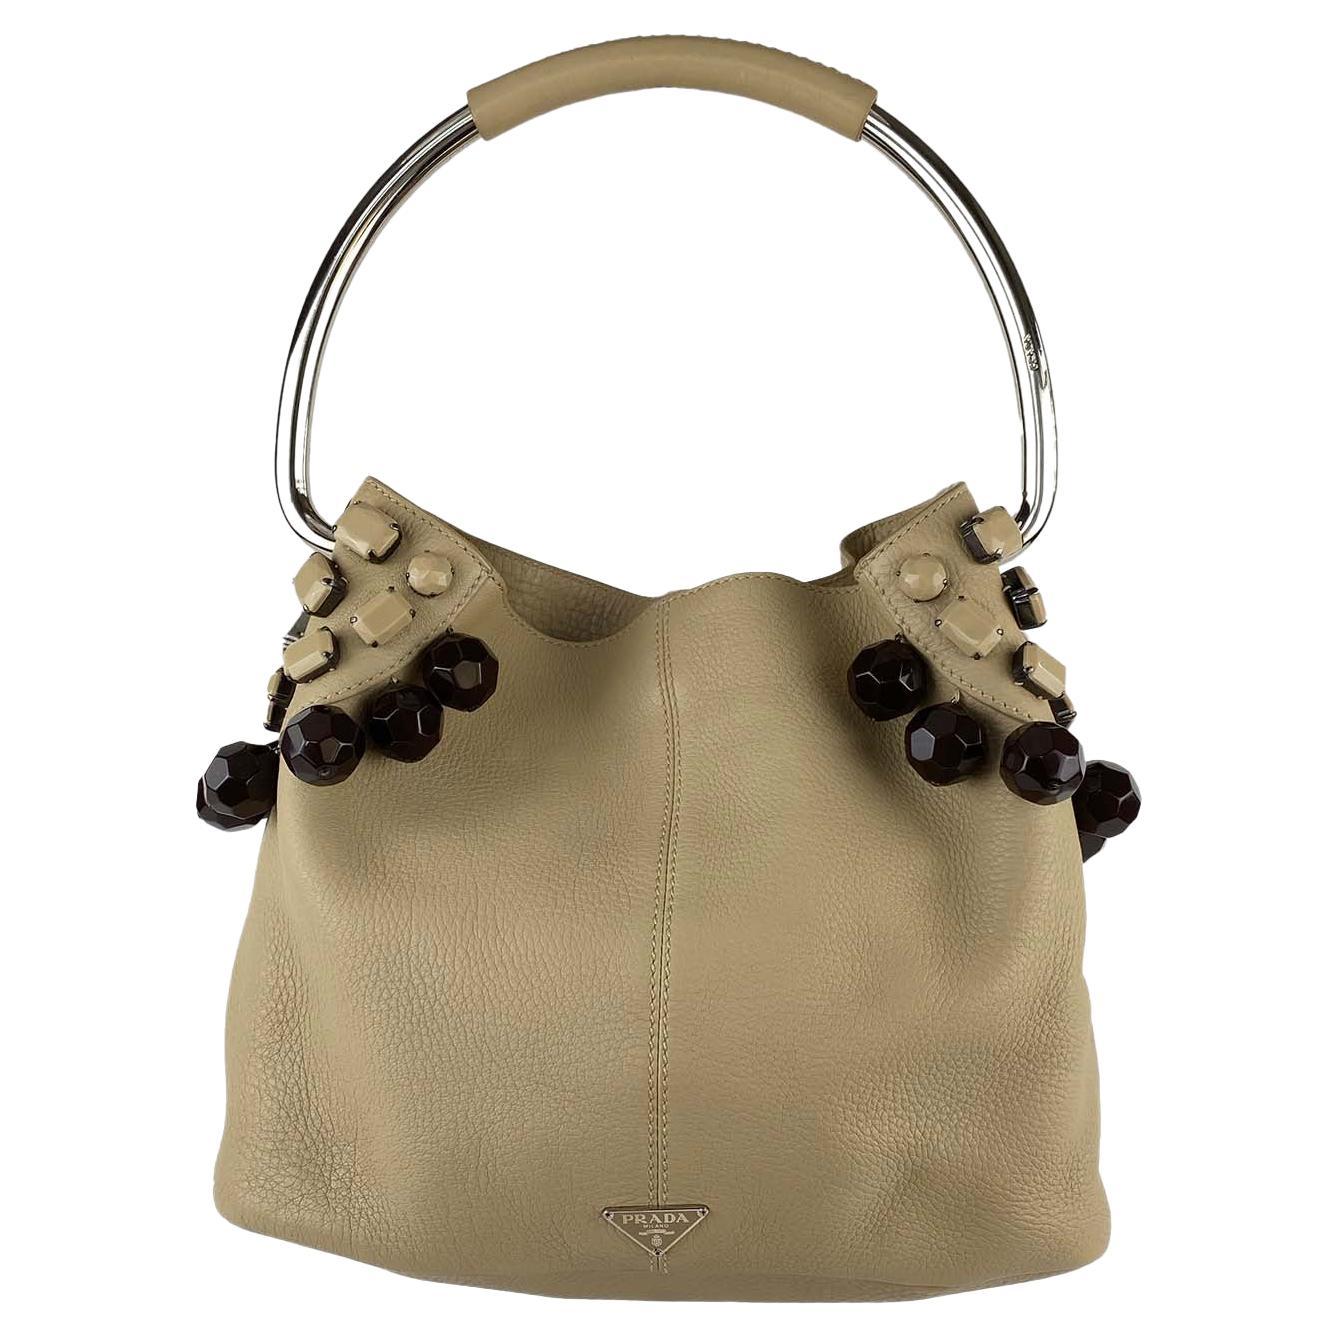 S/S 2003 Prada Oversized Beaded Leather & Metal Hoop Ring Medium Hobo Bag